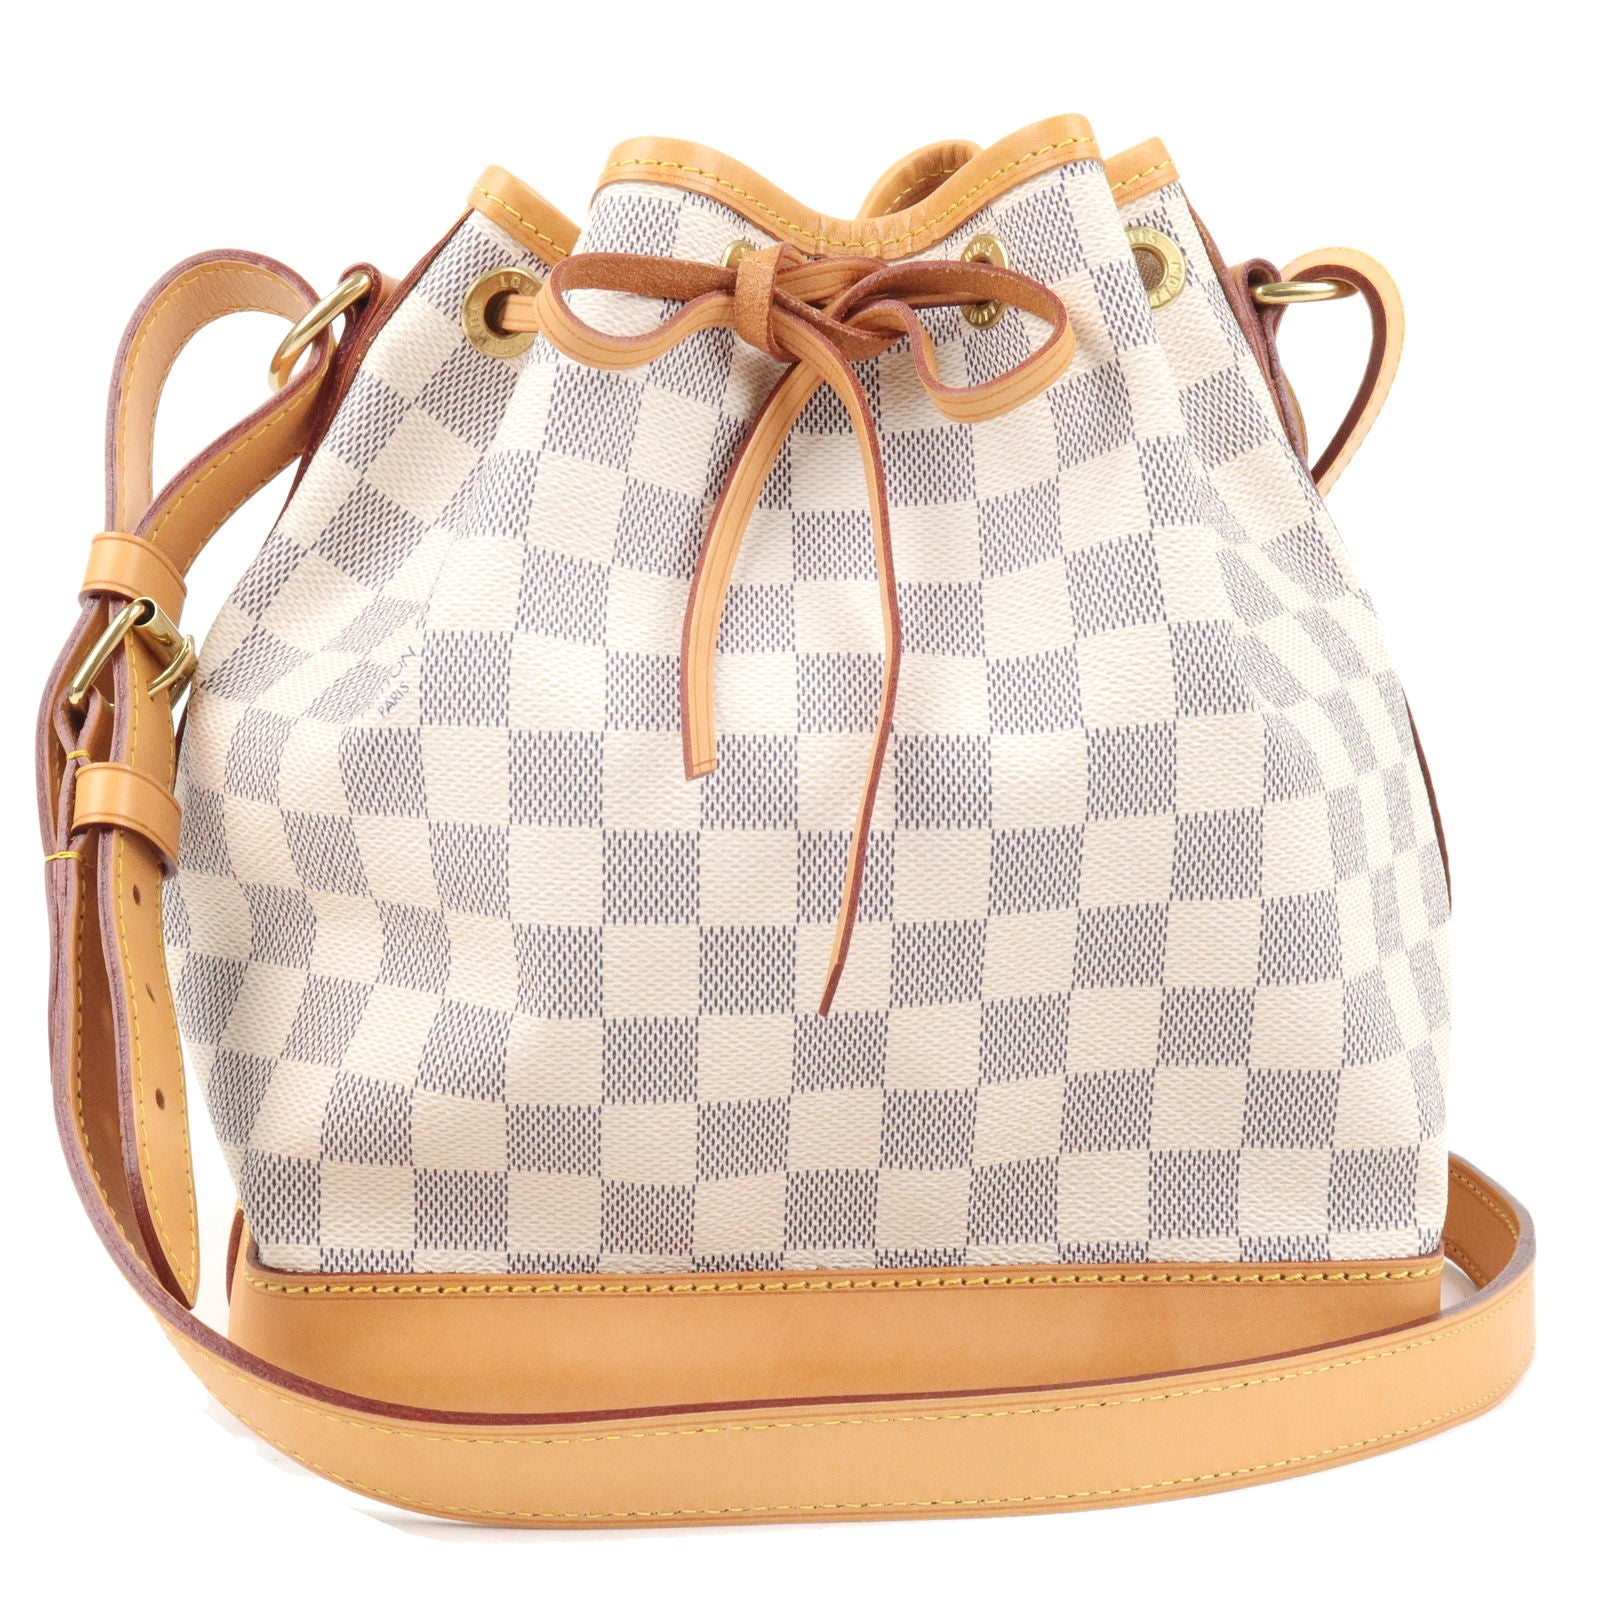 Pre-owned Chanel Pink Crocodile Shoulder Bag  Leather shoulder handbags,  Shoulder bag, Pink leather handbags